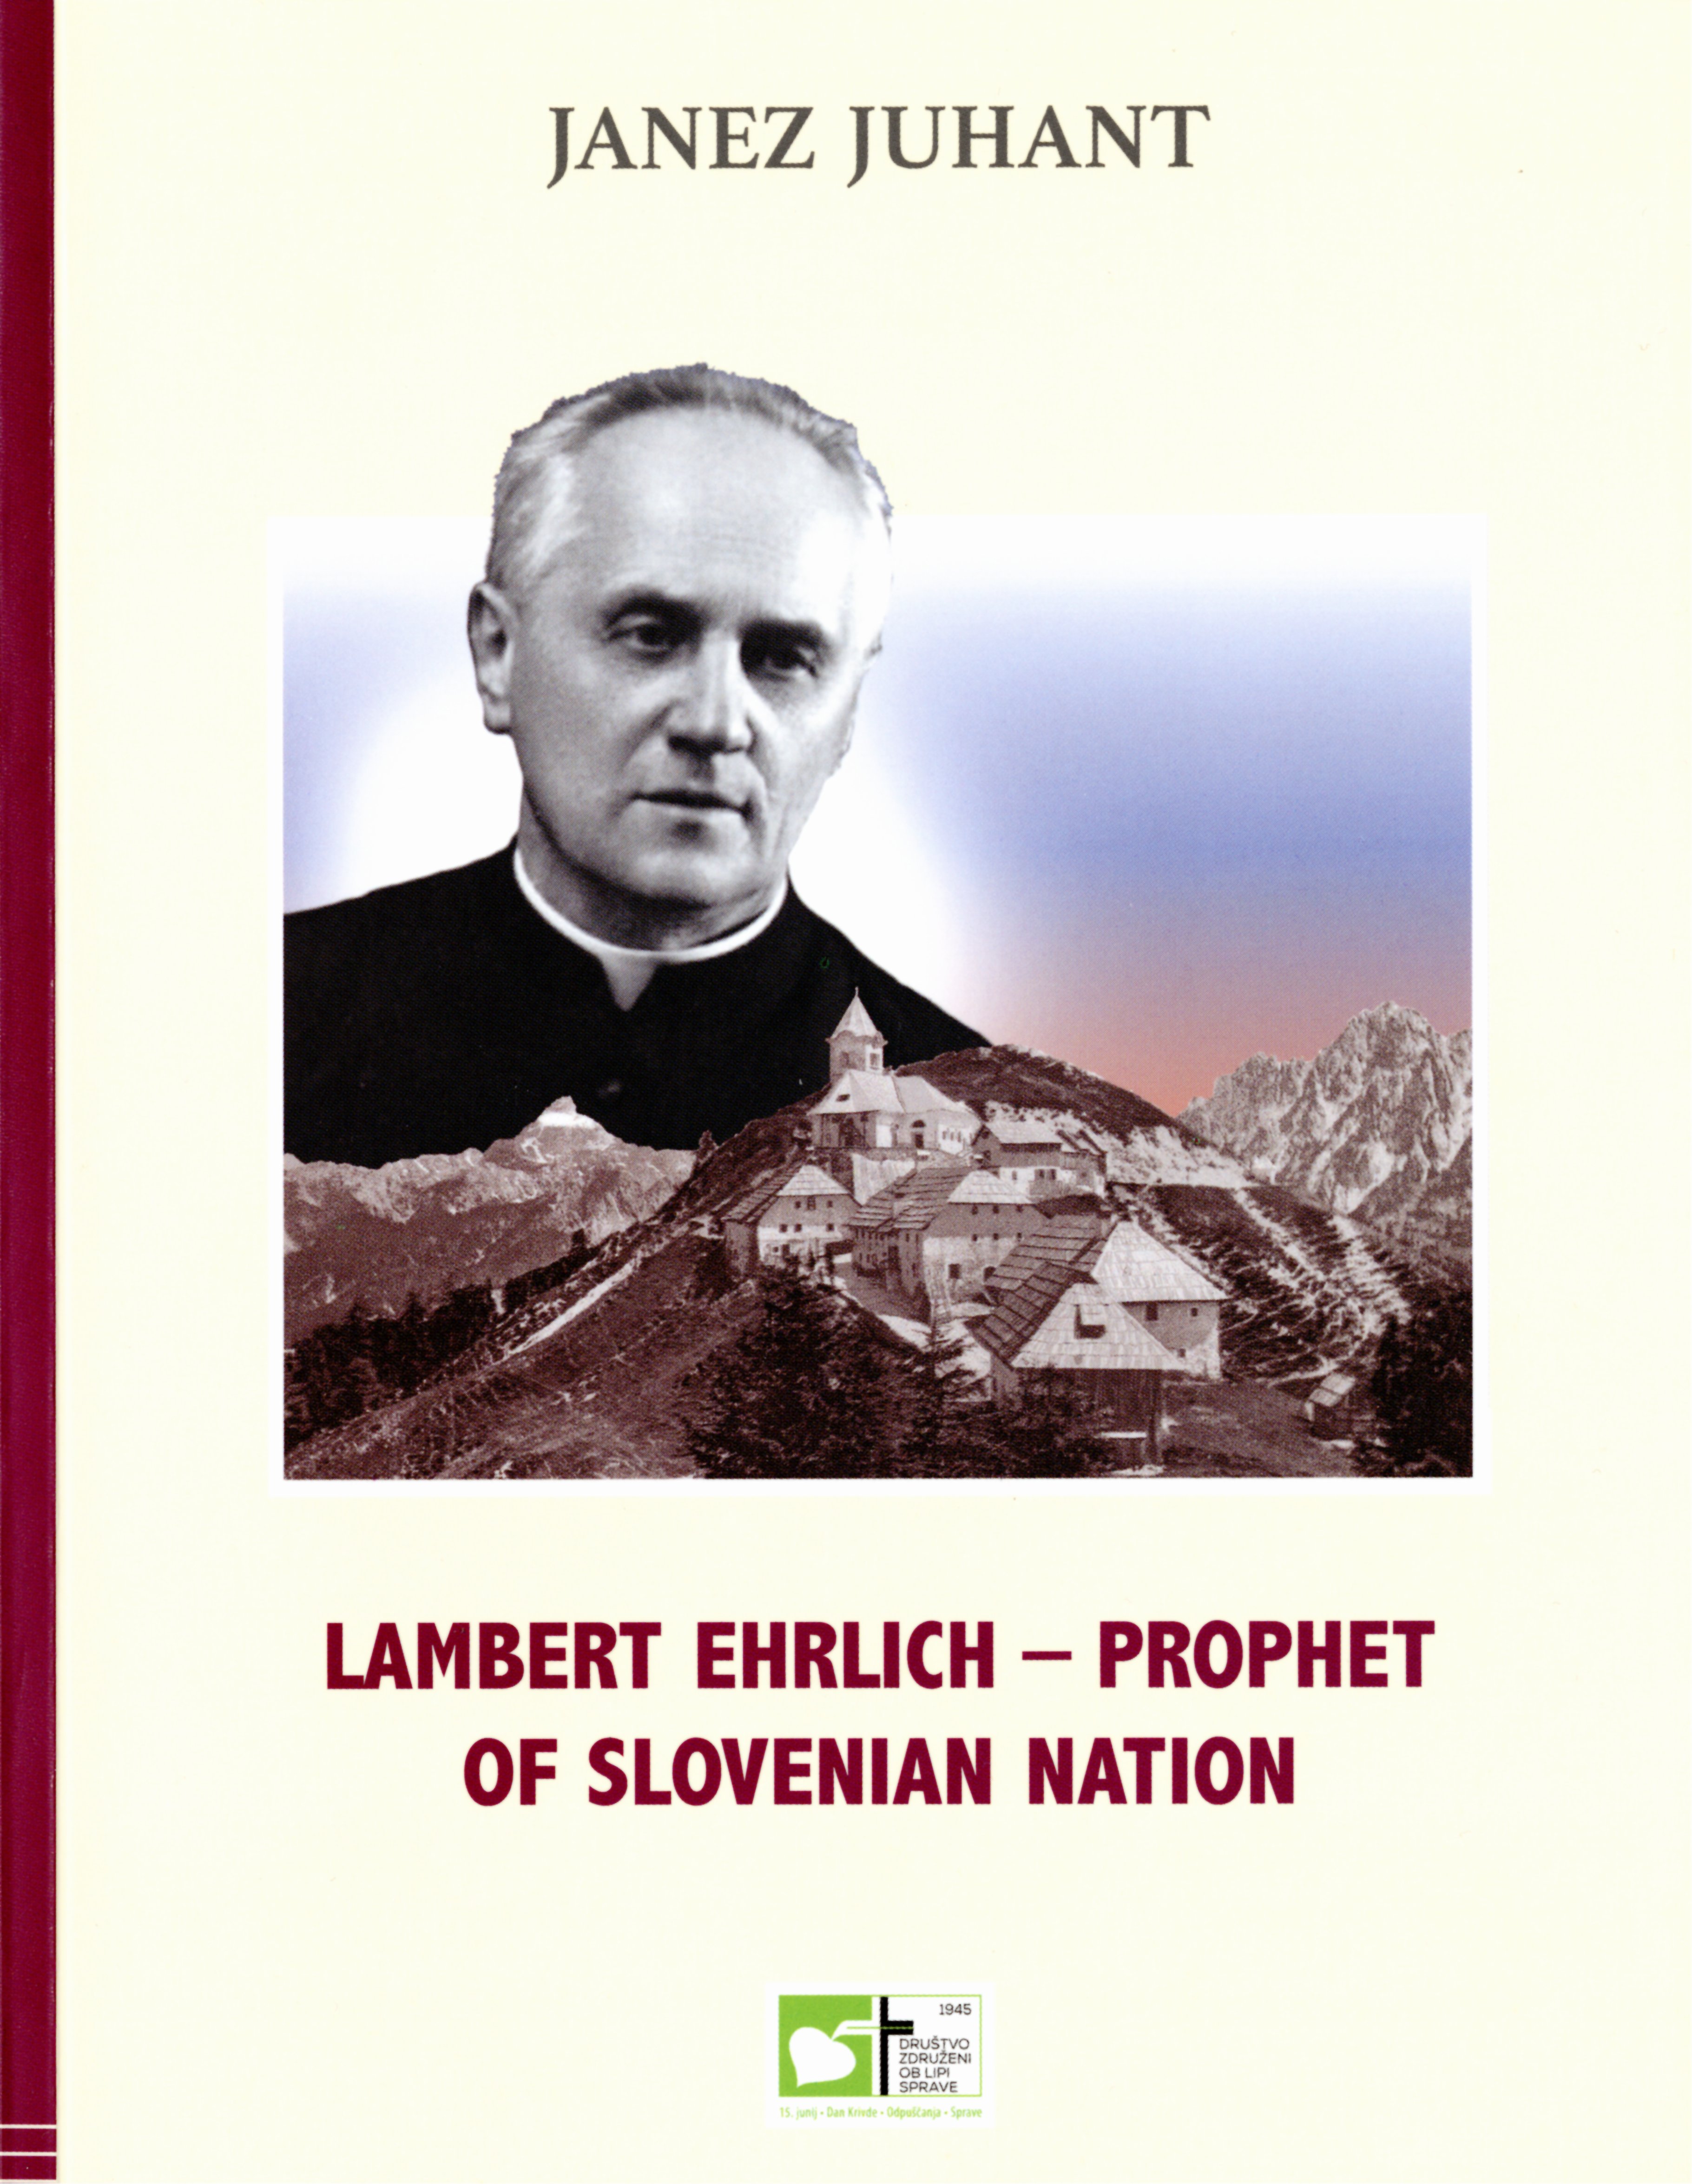 LAMBERT EHRLICH - PROPHET OF SLOVENIAN NATION